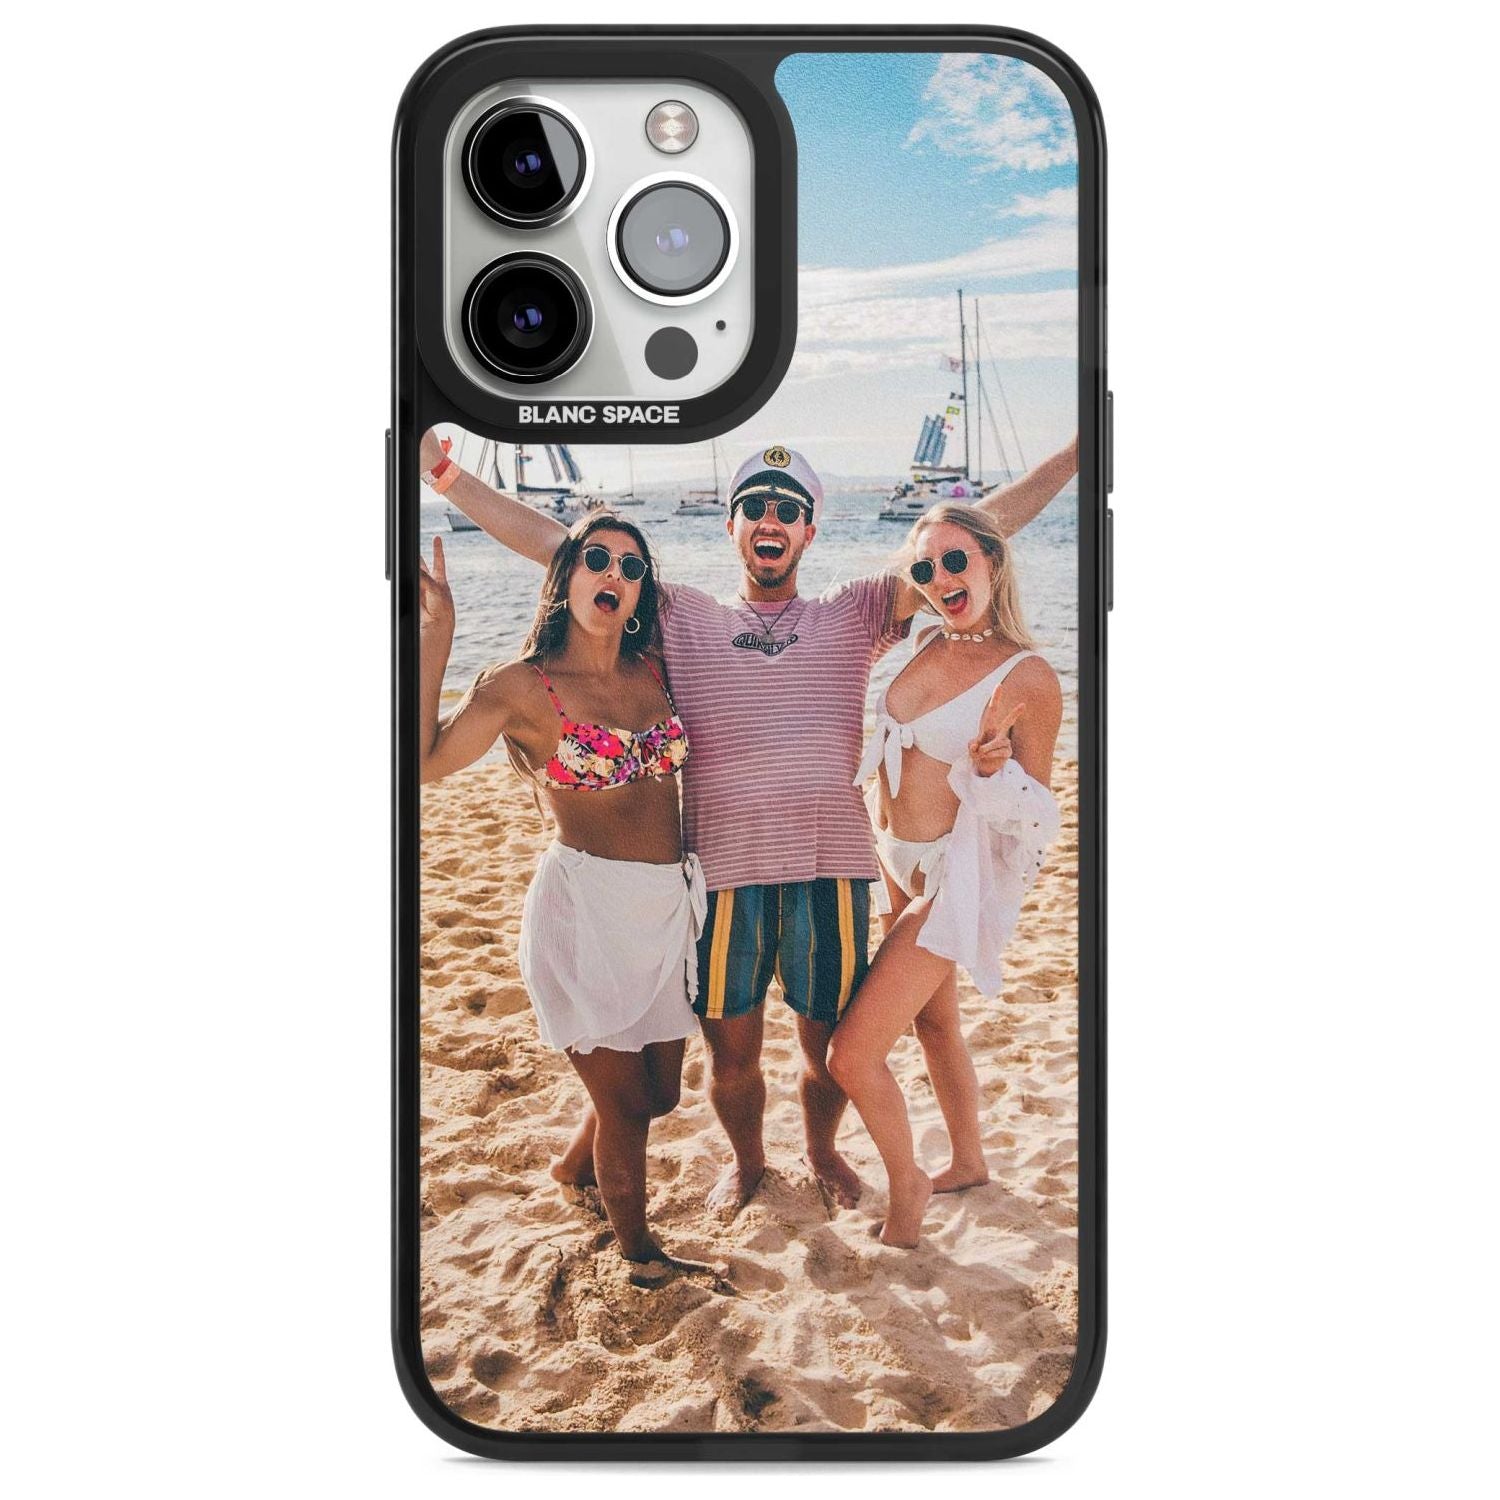 Personalised Photo Custom Phone Case iPhone 13 Pro Max / Magsafe Black Impact Case Blanc Space